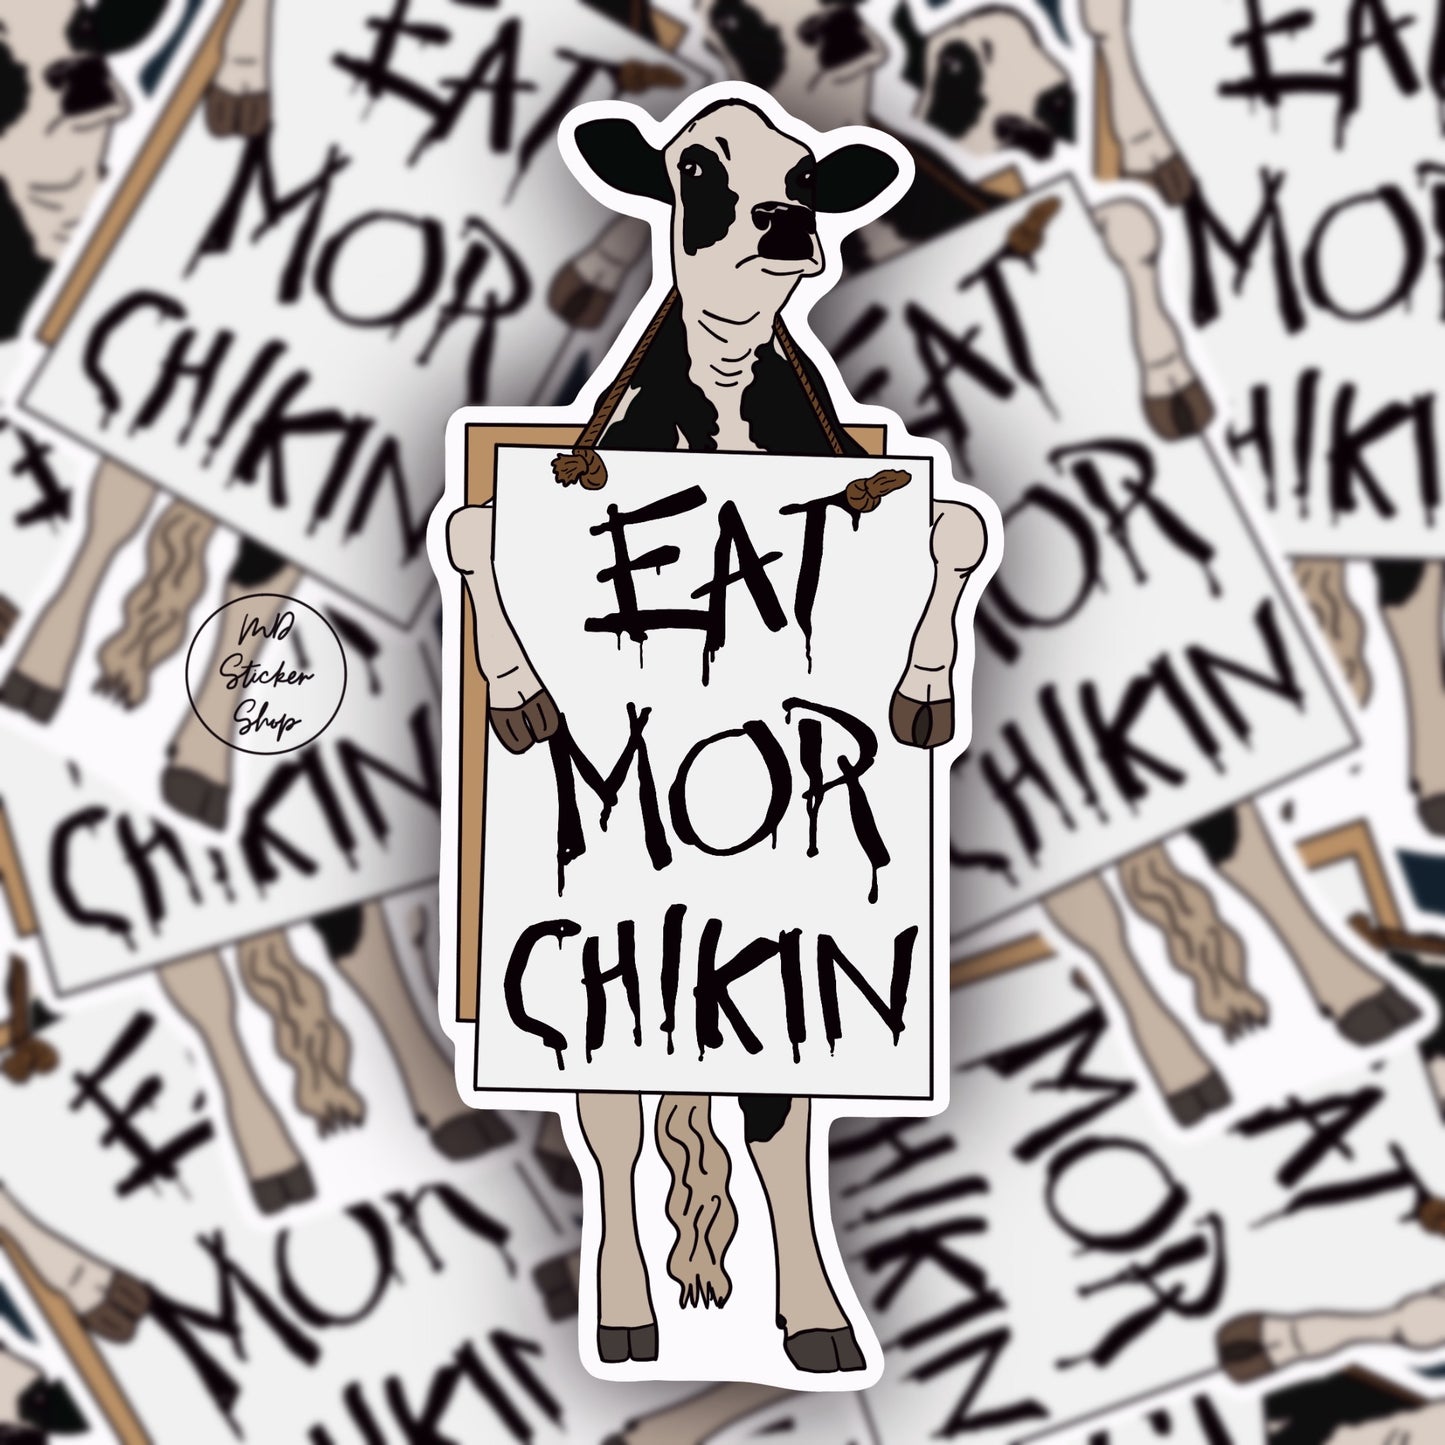 Chick Fil’ A Cow “Eat Mor Chikin” Vinyl Sticker